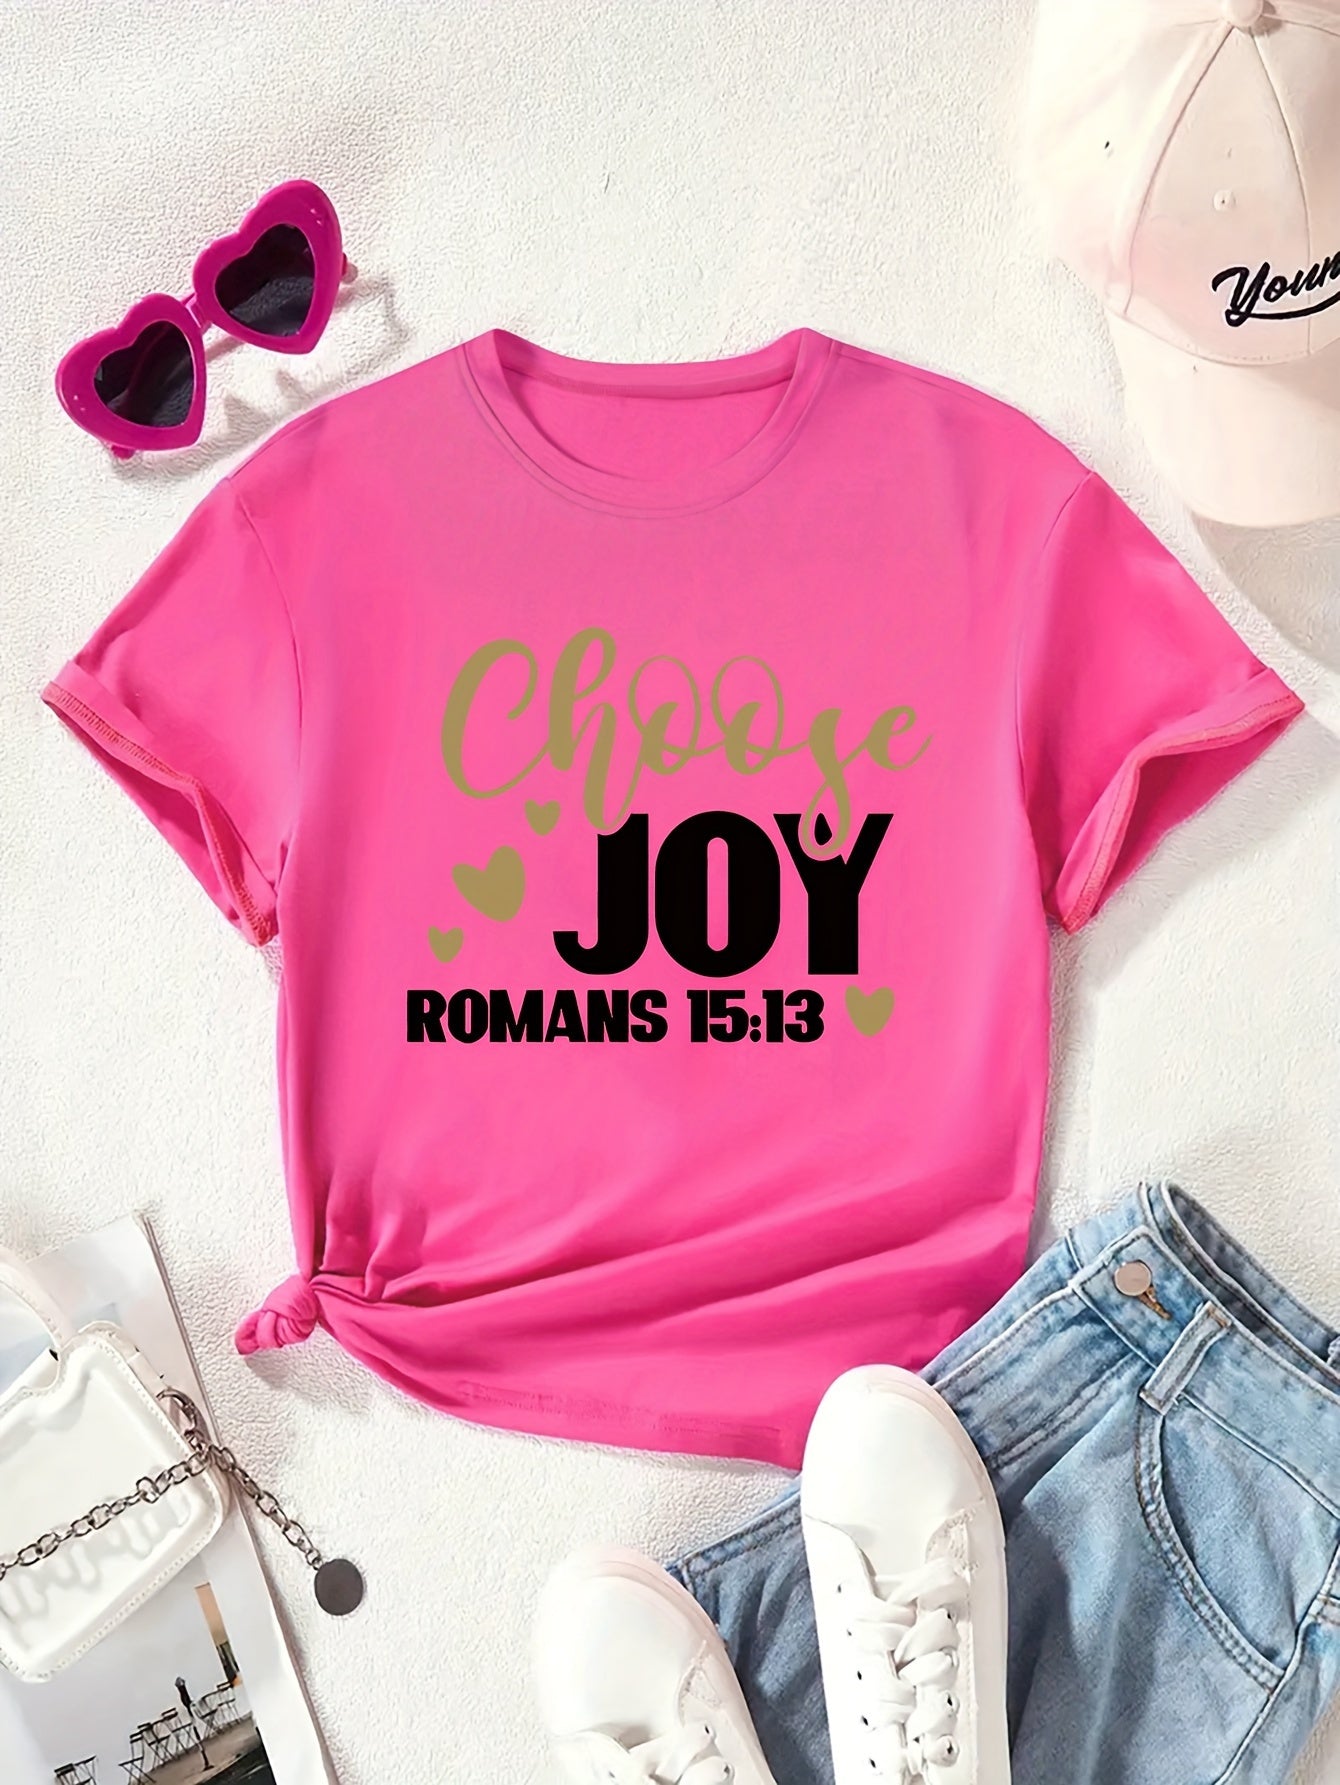 CHOOSE JOY Youth Christian T-shirt claimedbygoddesigns